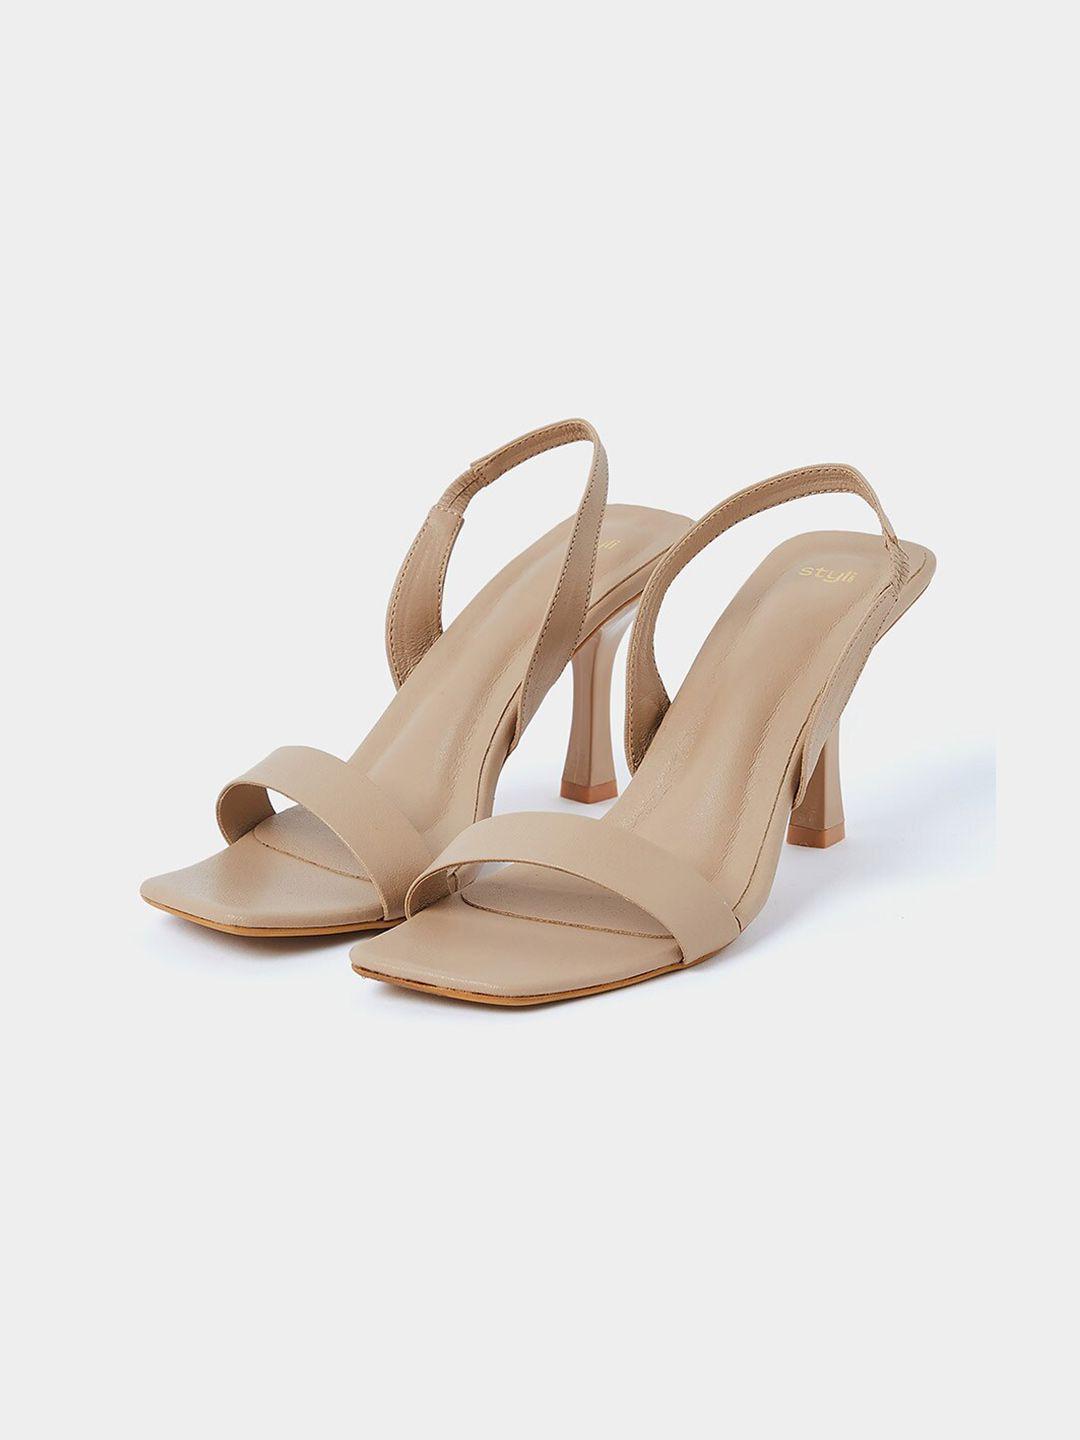 styli-beige-slim-heeled-sandals